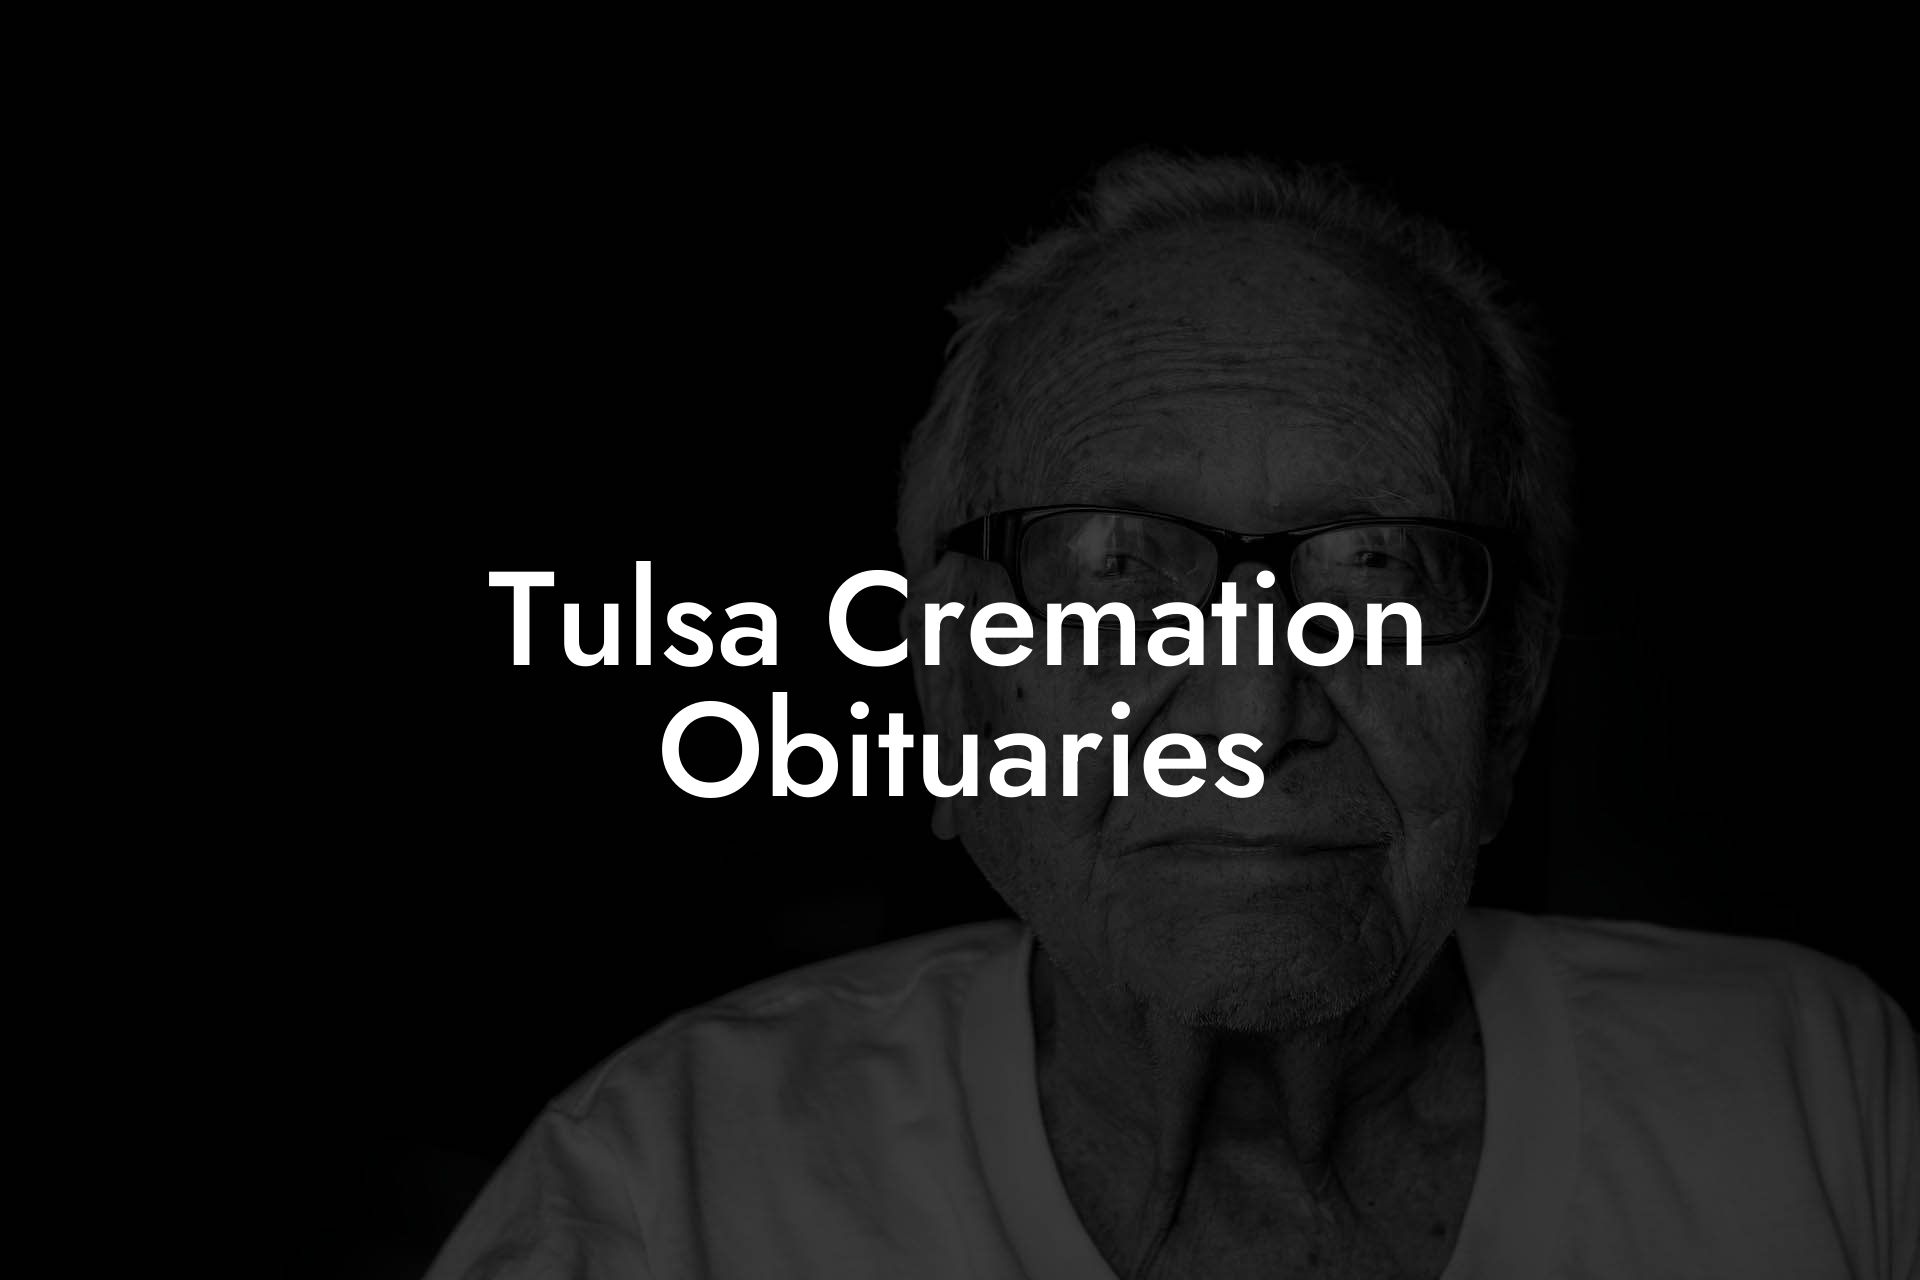 Tulsa Cremation Obituaries